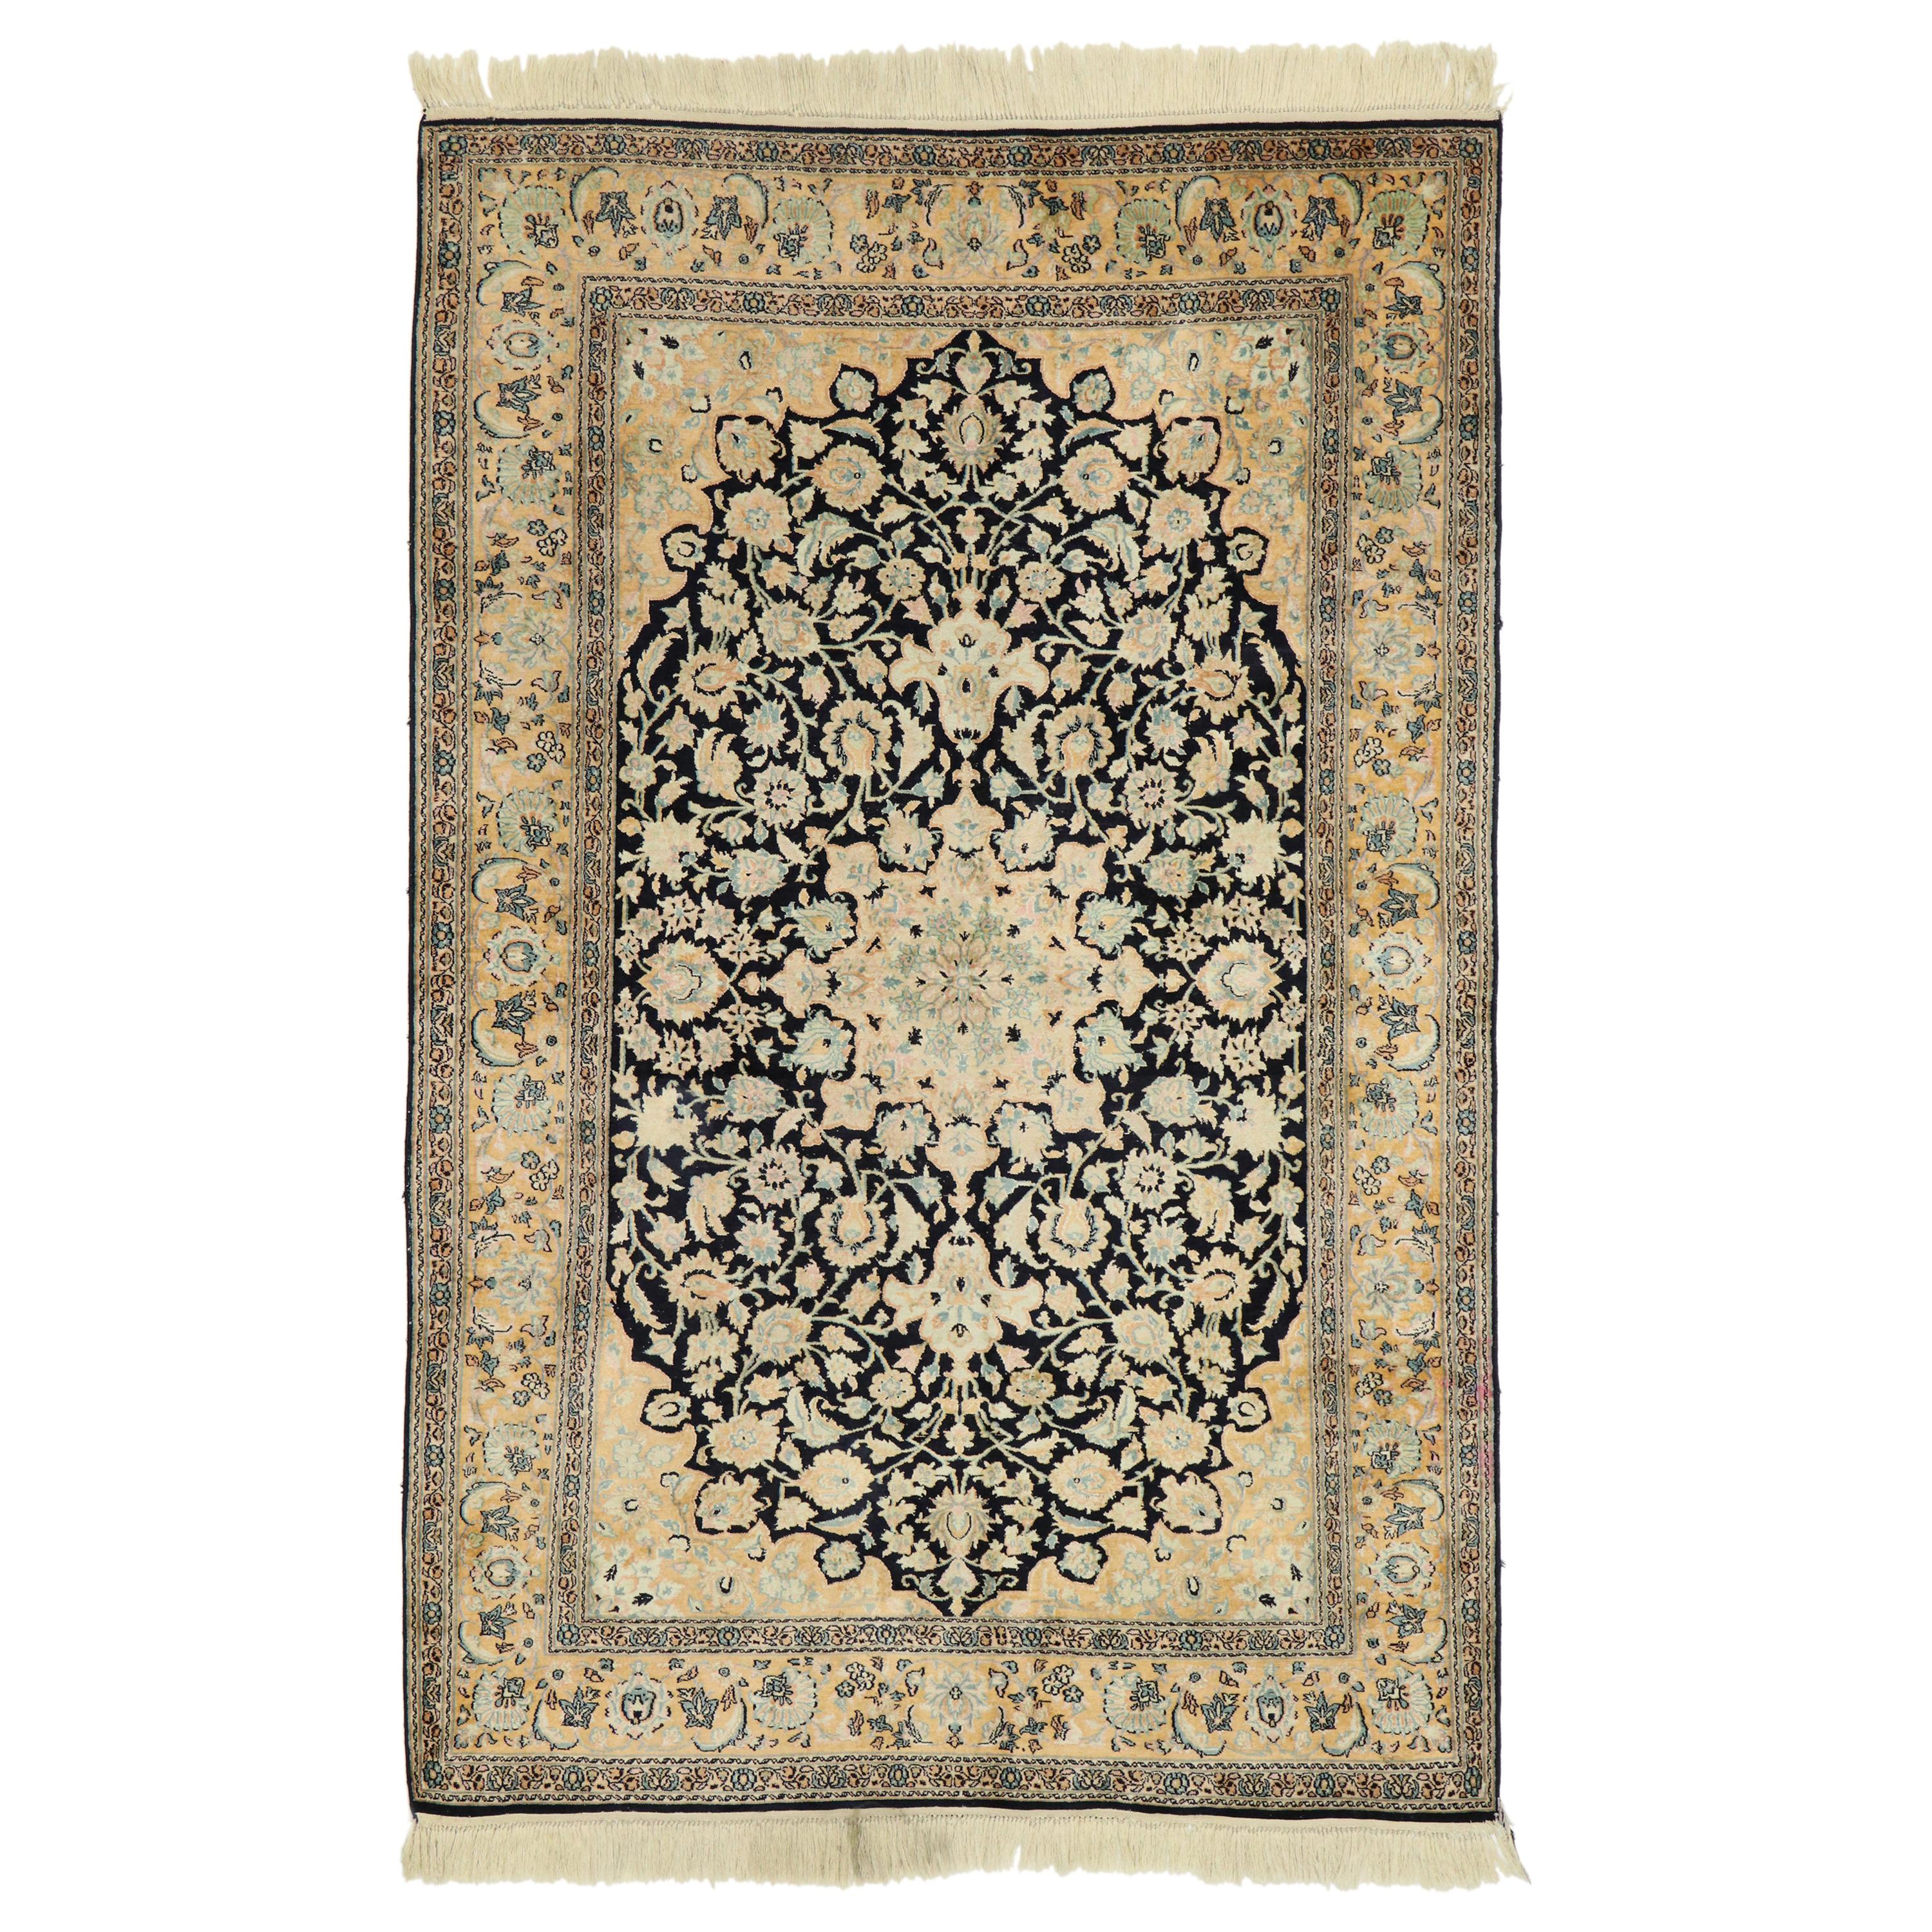 Vintage Persian Qum Silk Rug with Art Nouveau Rococo Style